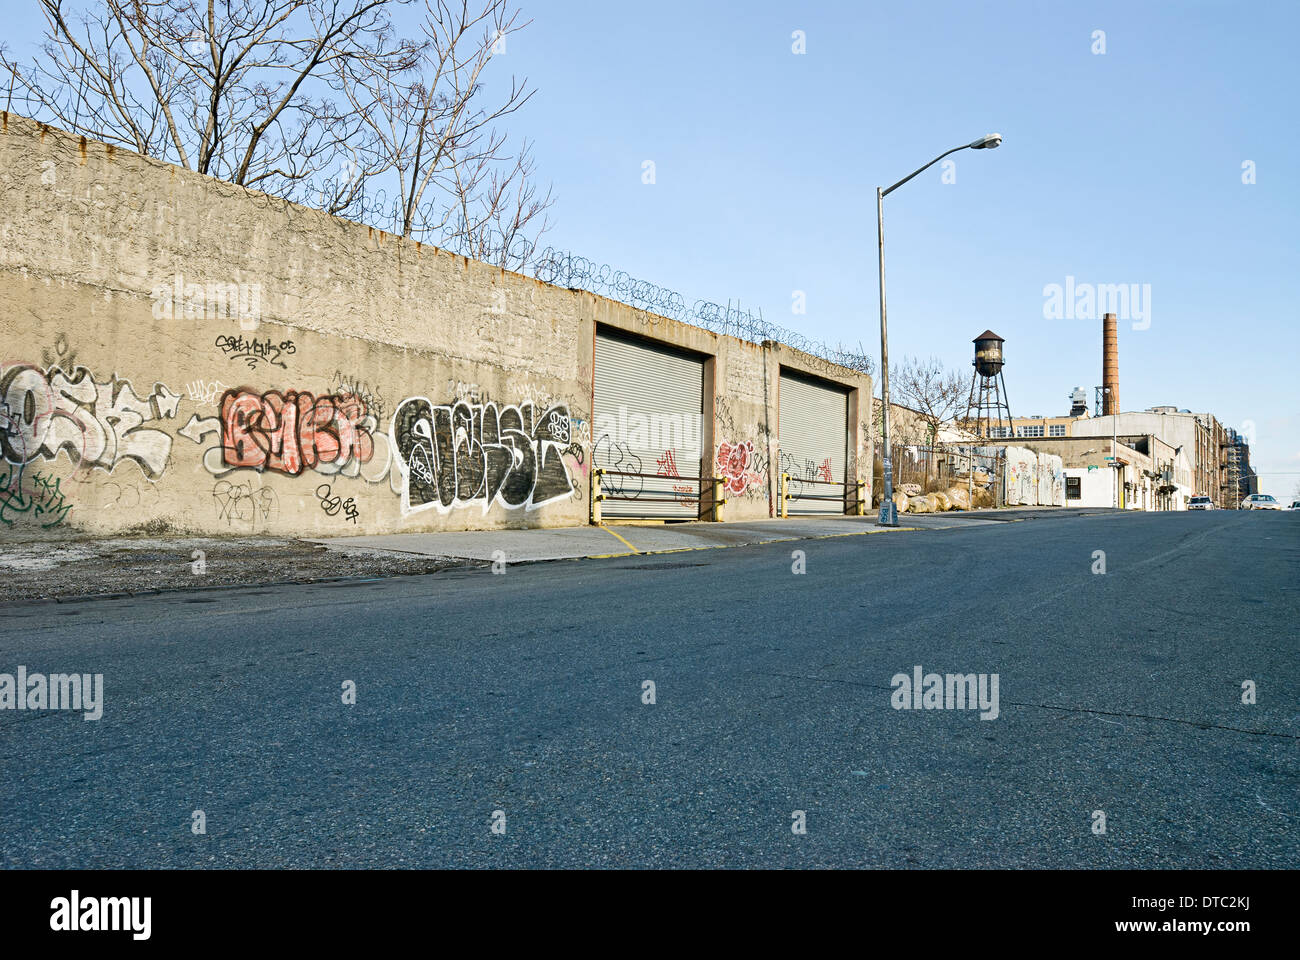 Deserted dangerous empty urban street scene with old warehouse buildings. Stock Photo